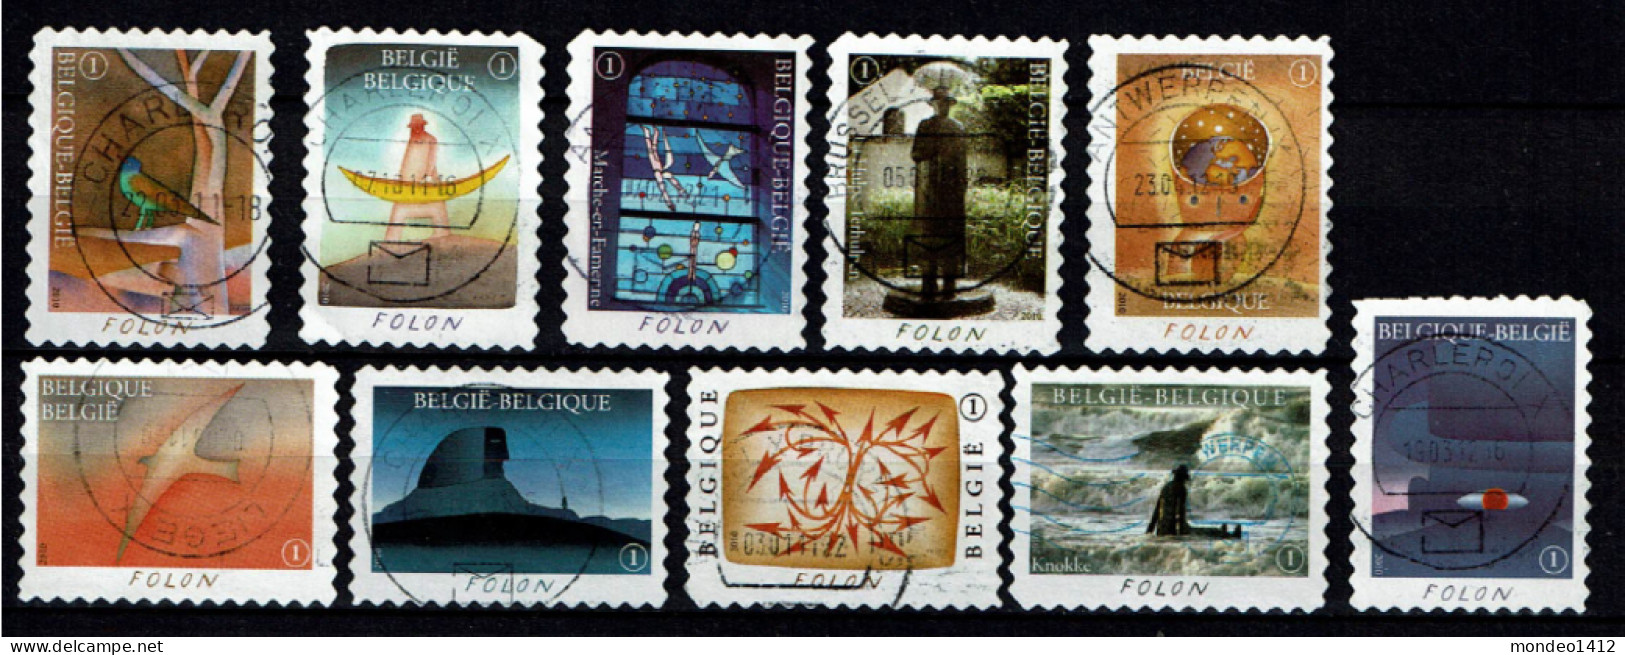 België OBP 4069/4078 - Zegels Uit Boekje B115 - De Magie Van Folon - Used Stamps